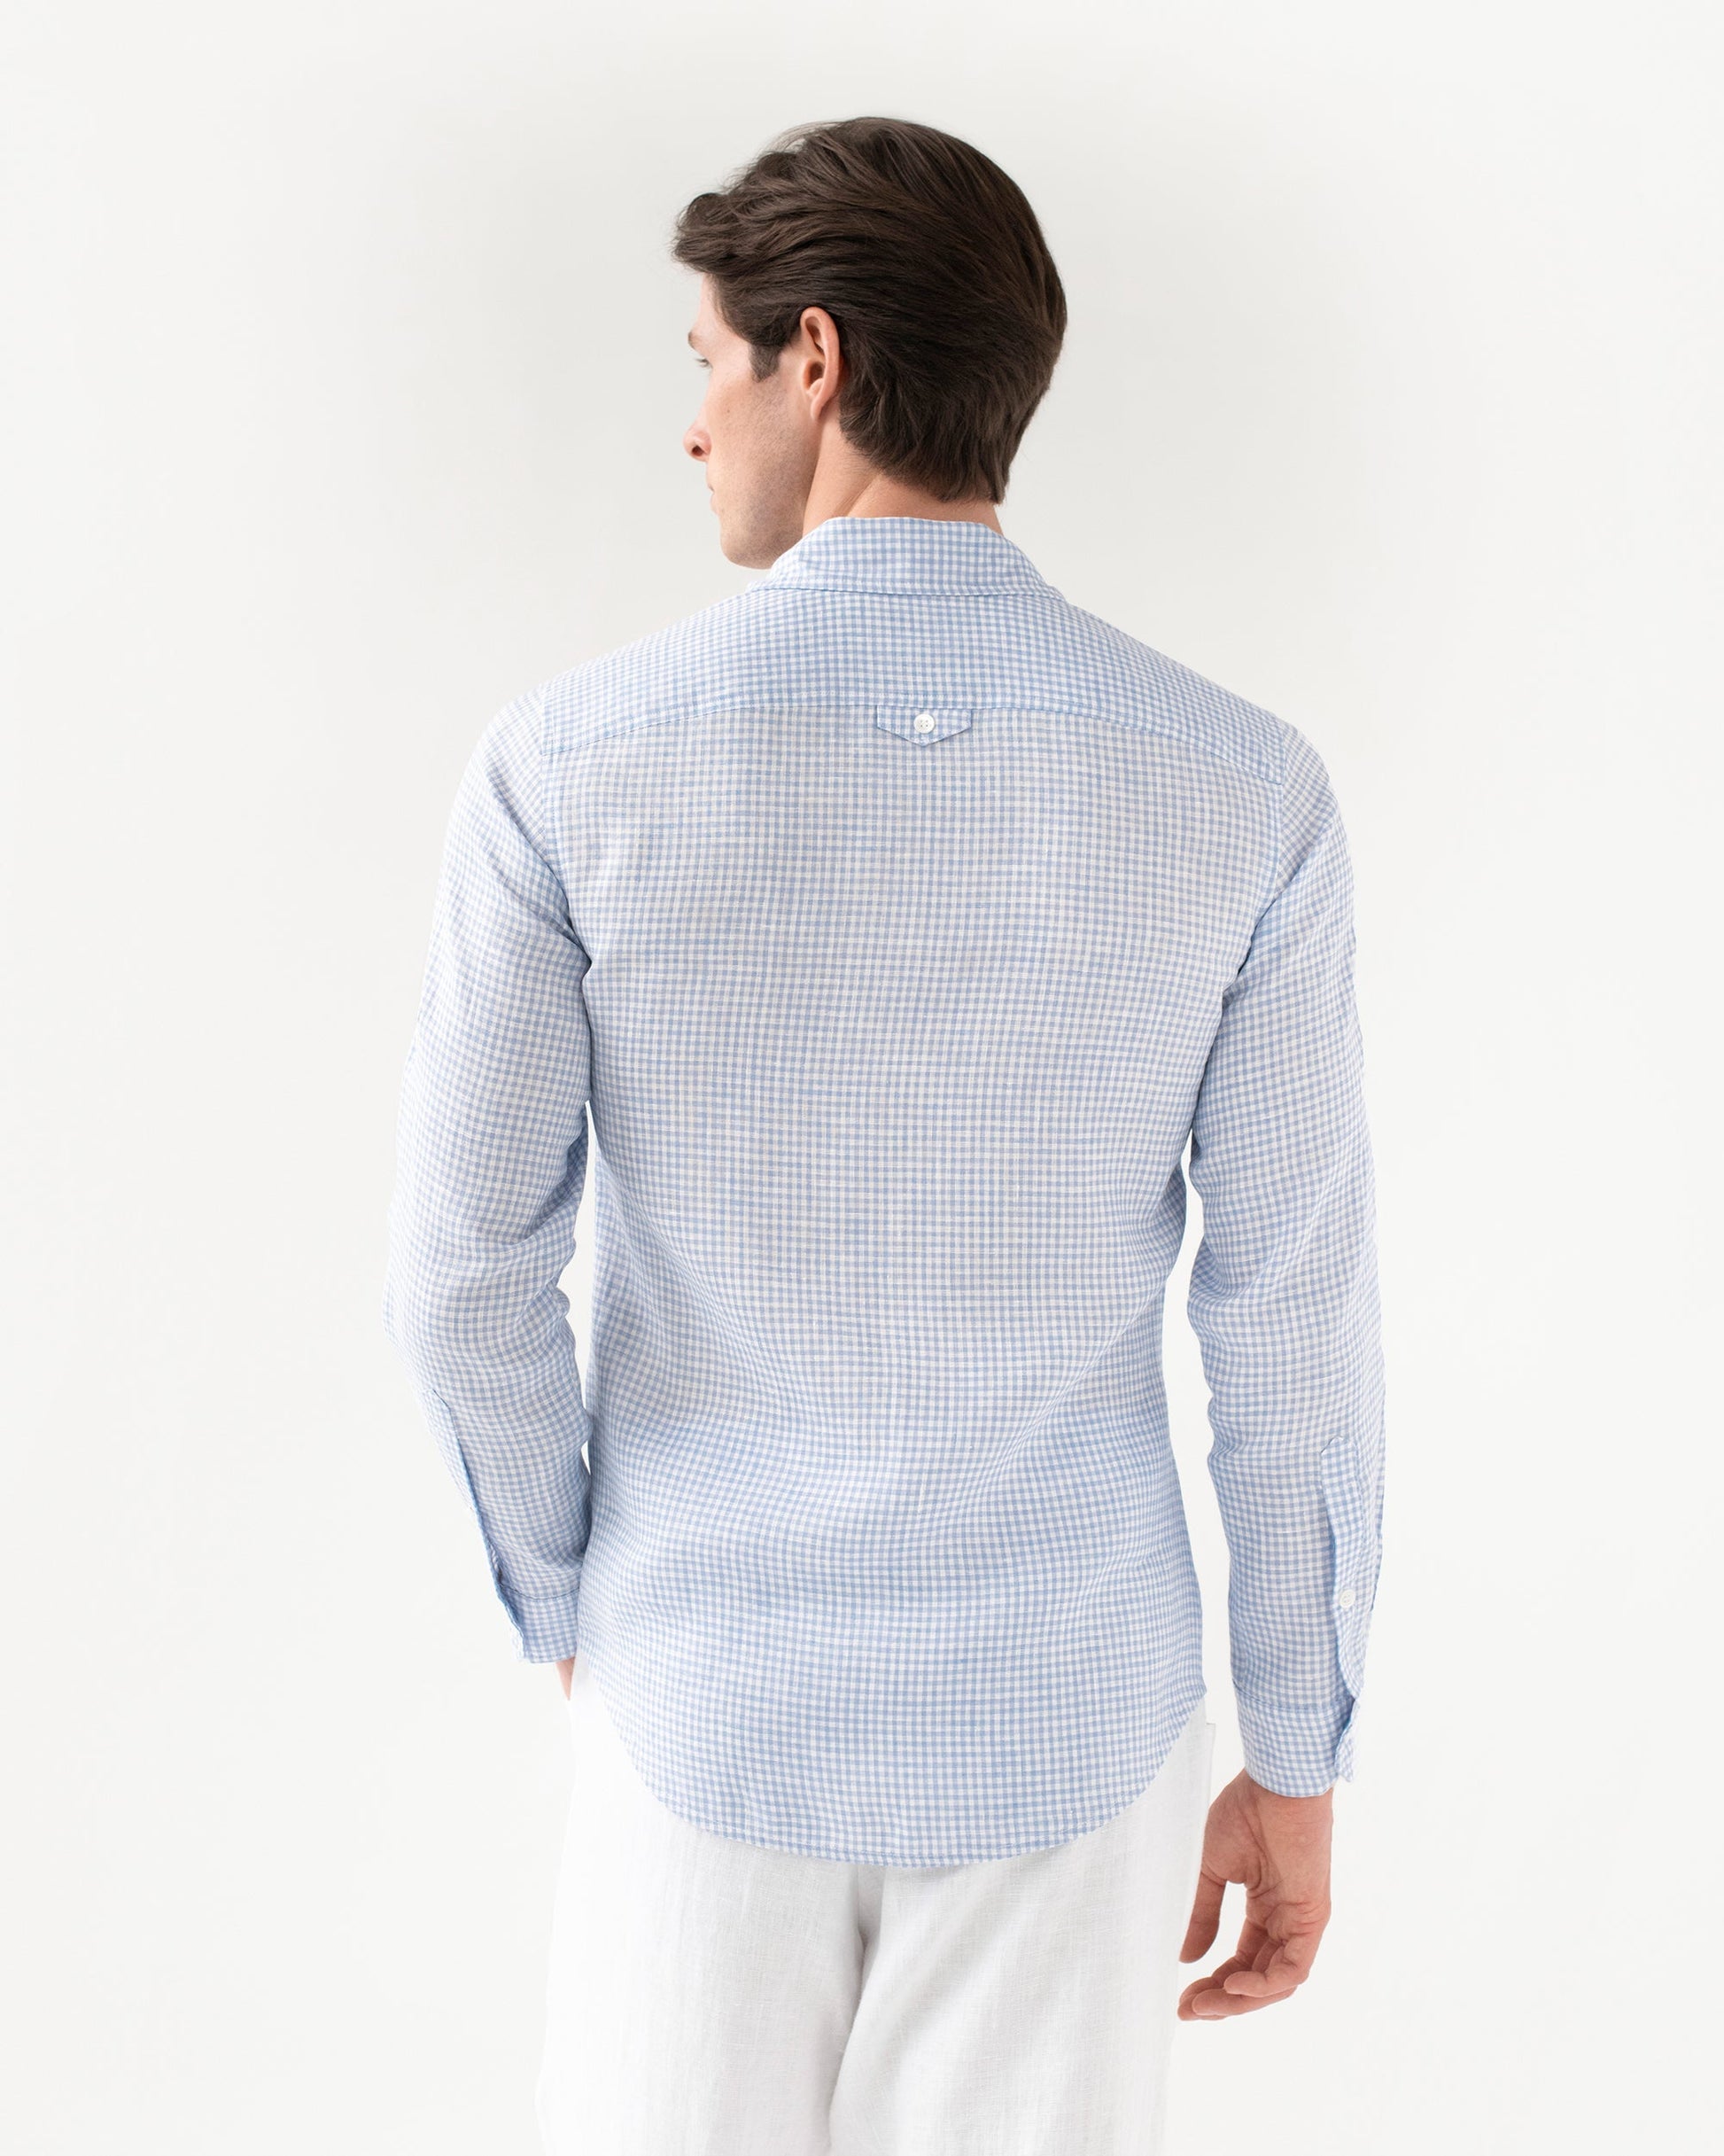 Men's linen shirt CORONADO in blue gingham